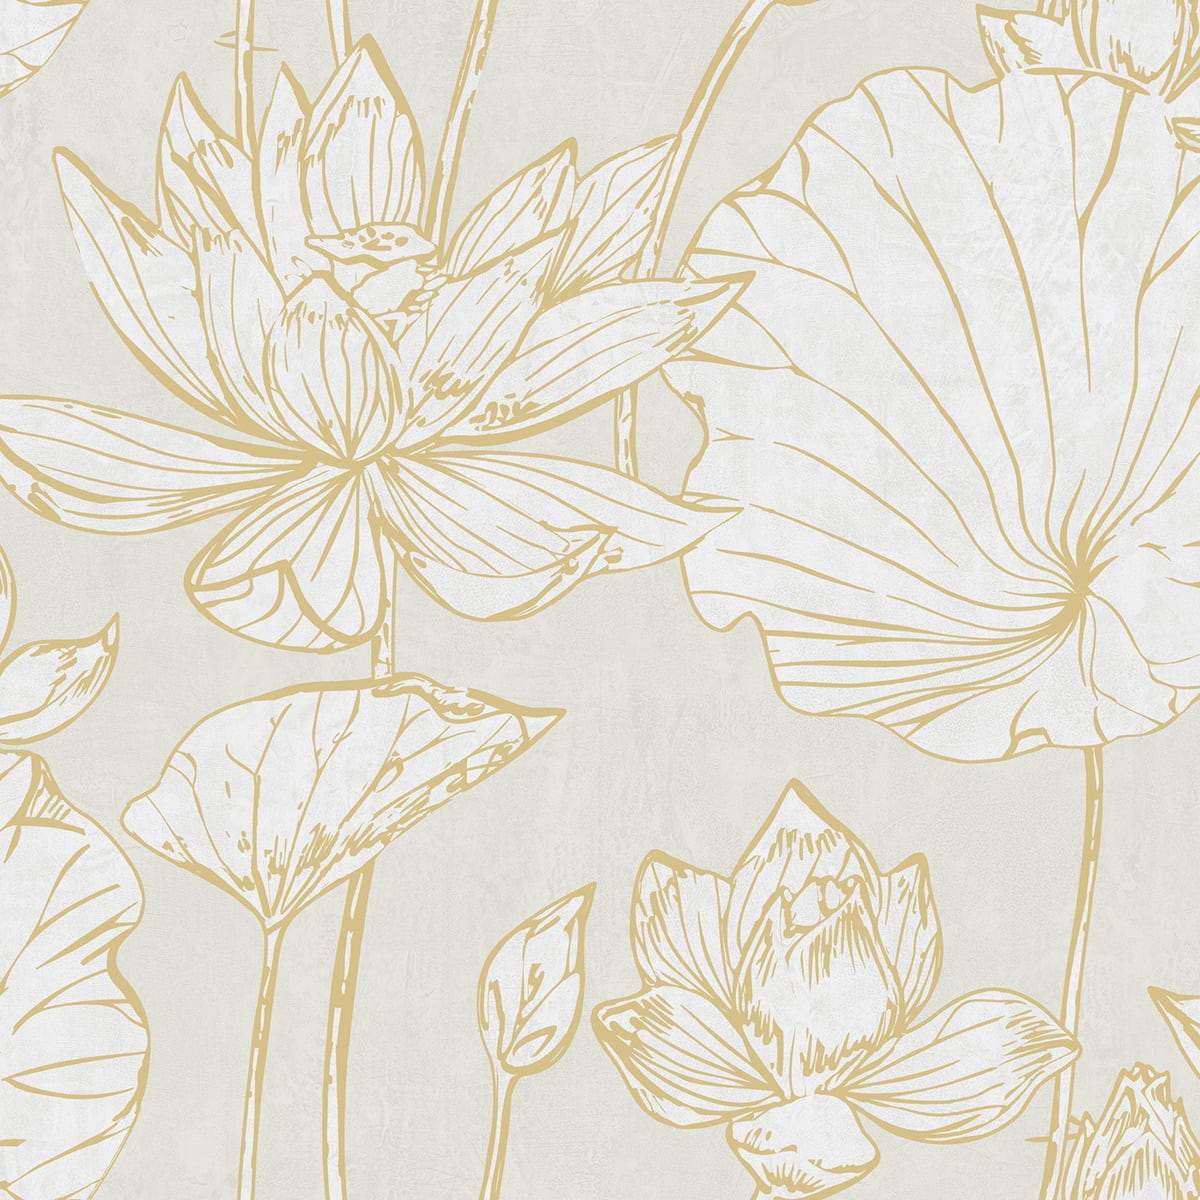 Lotus Floral AI42305 Seabrook Wallpaper